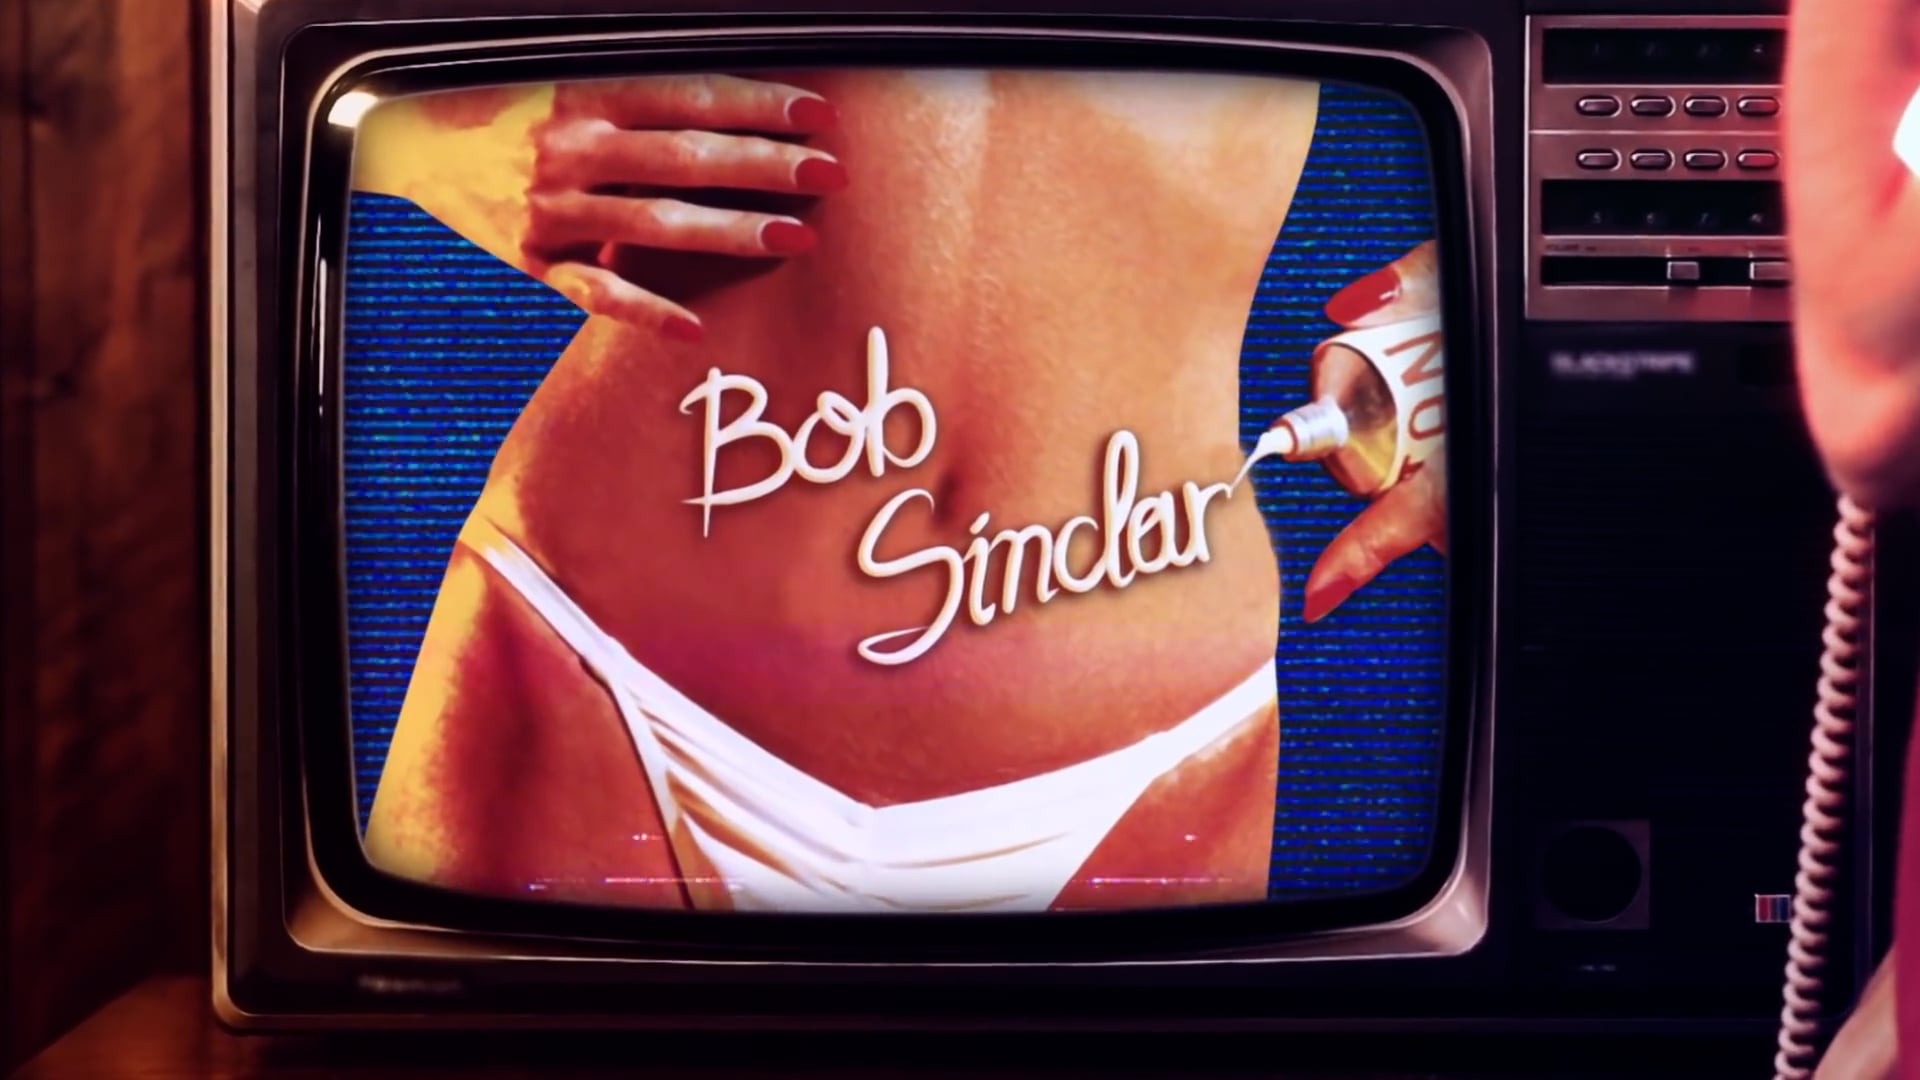 Bob Sinclar "we could be dancing"